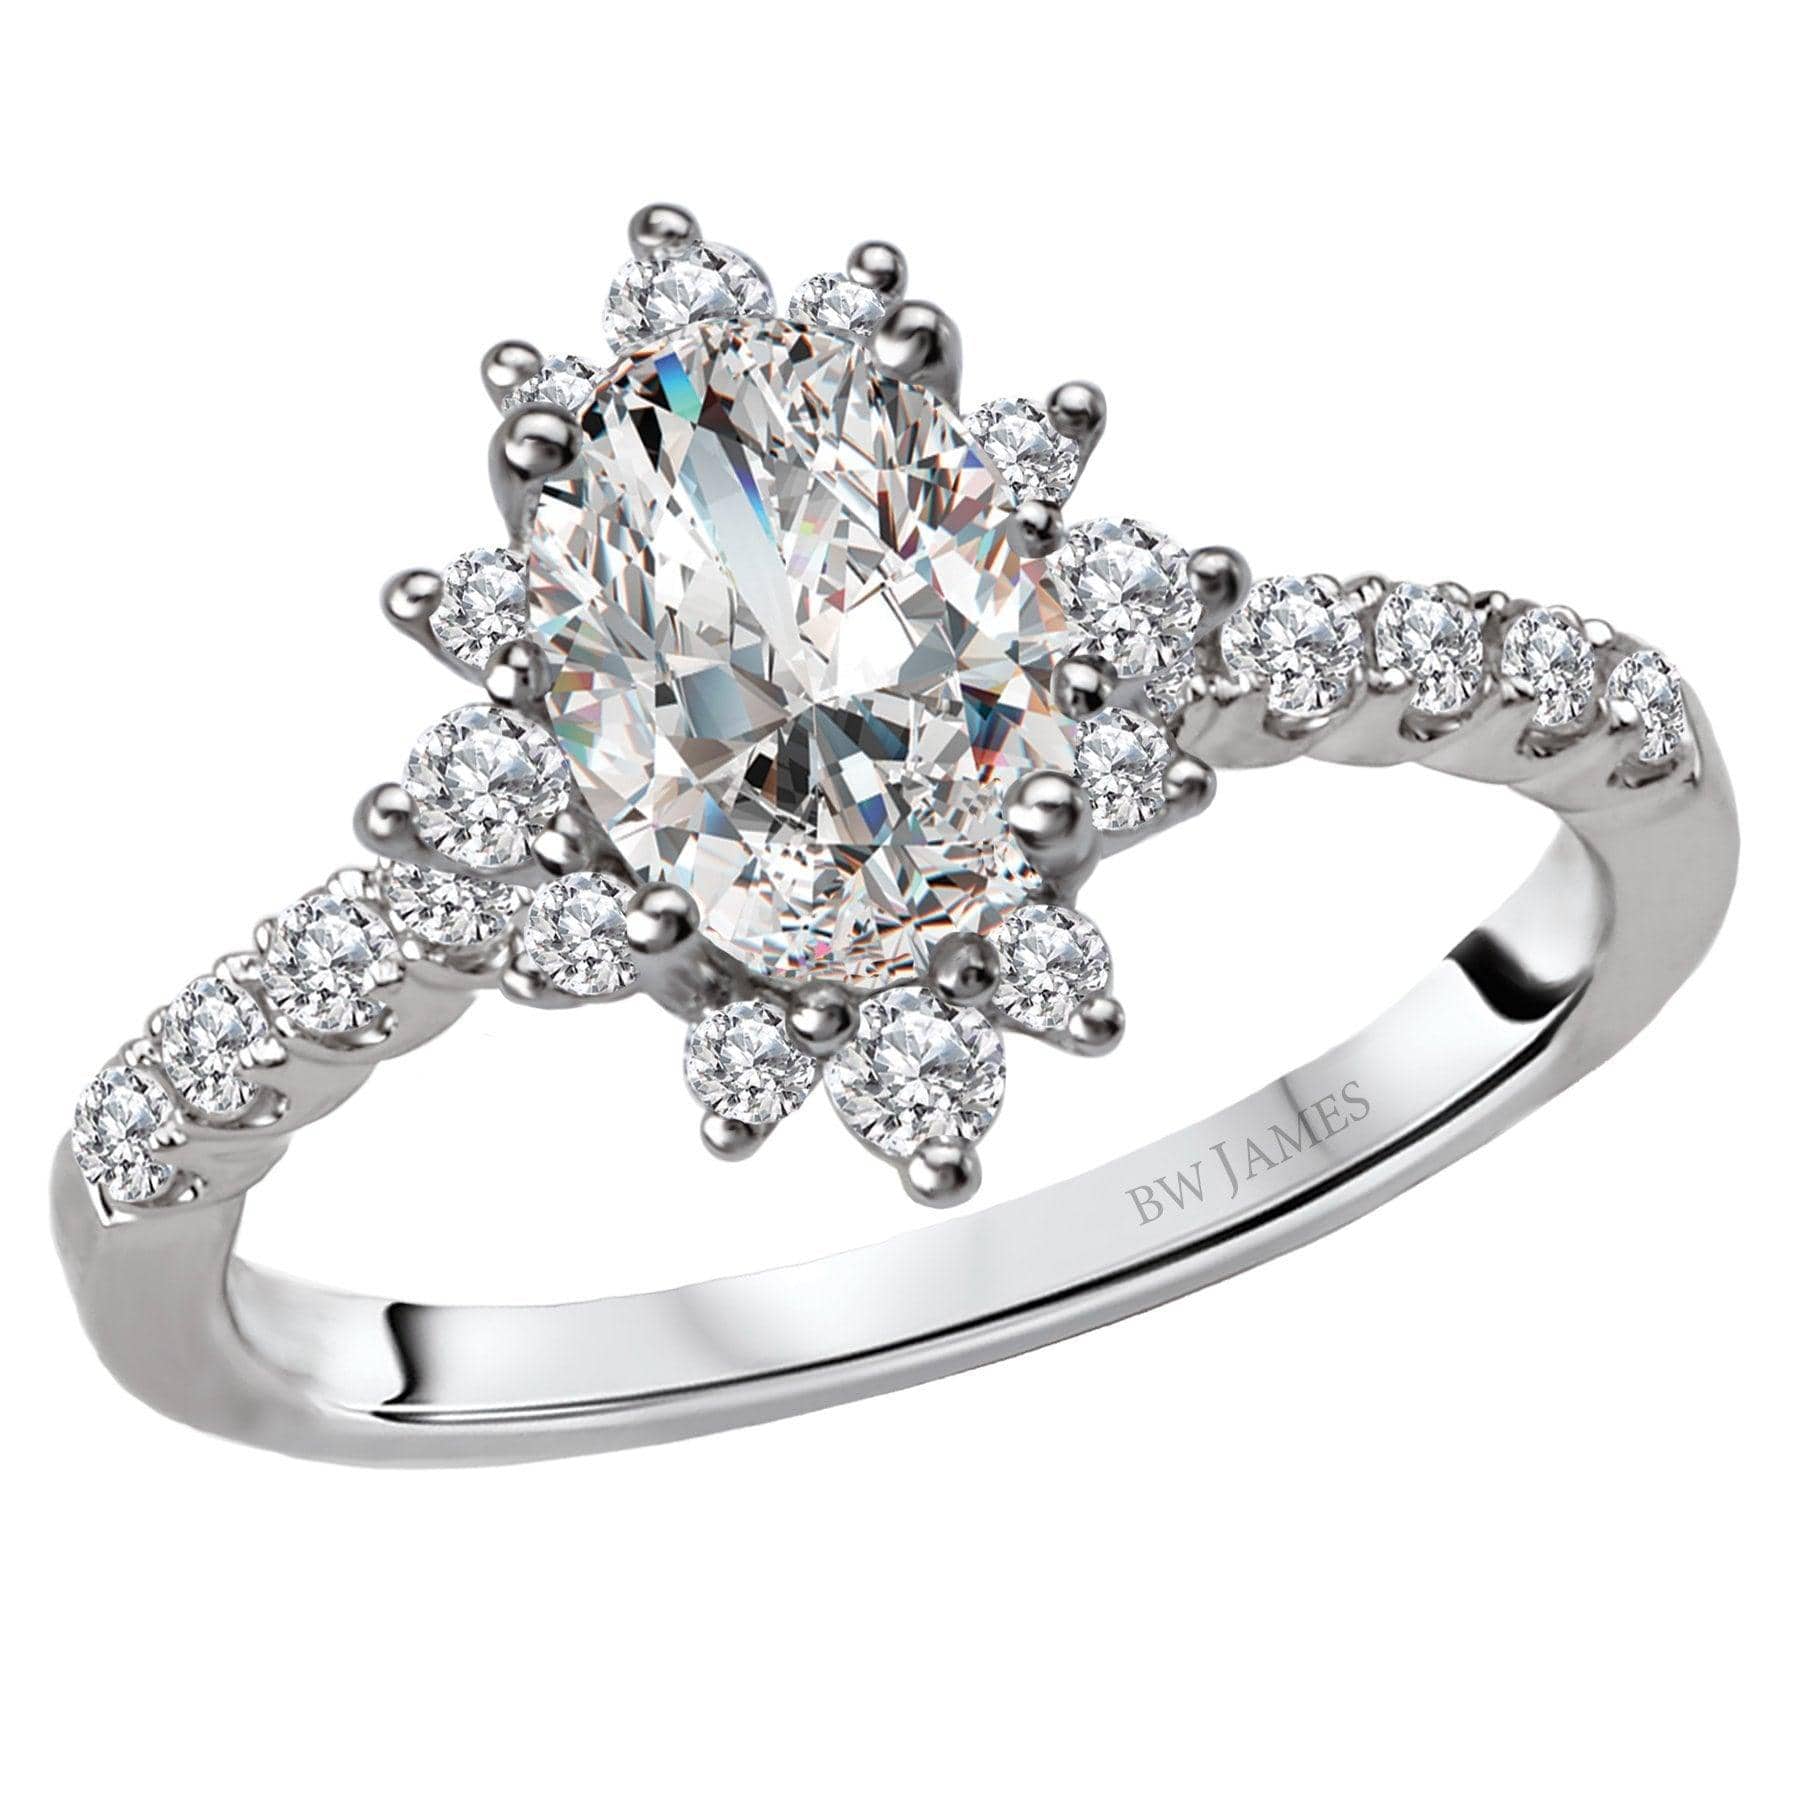 BW JAMES Engagement Rings > Diamond Rings " The Argentina" Halo Semi-Mount Diamond Ring